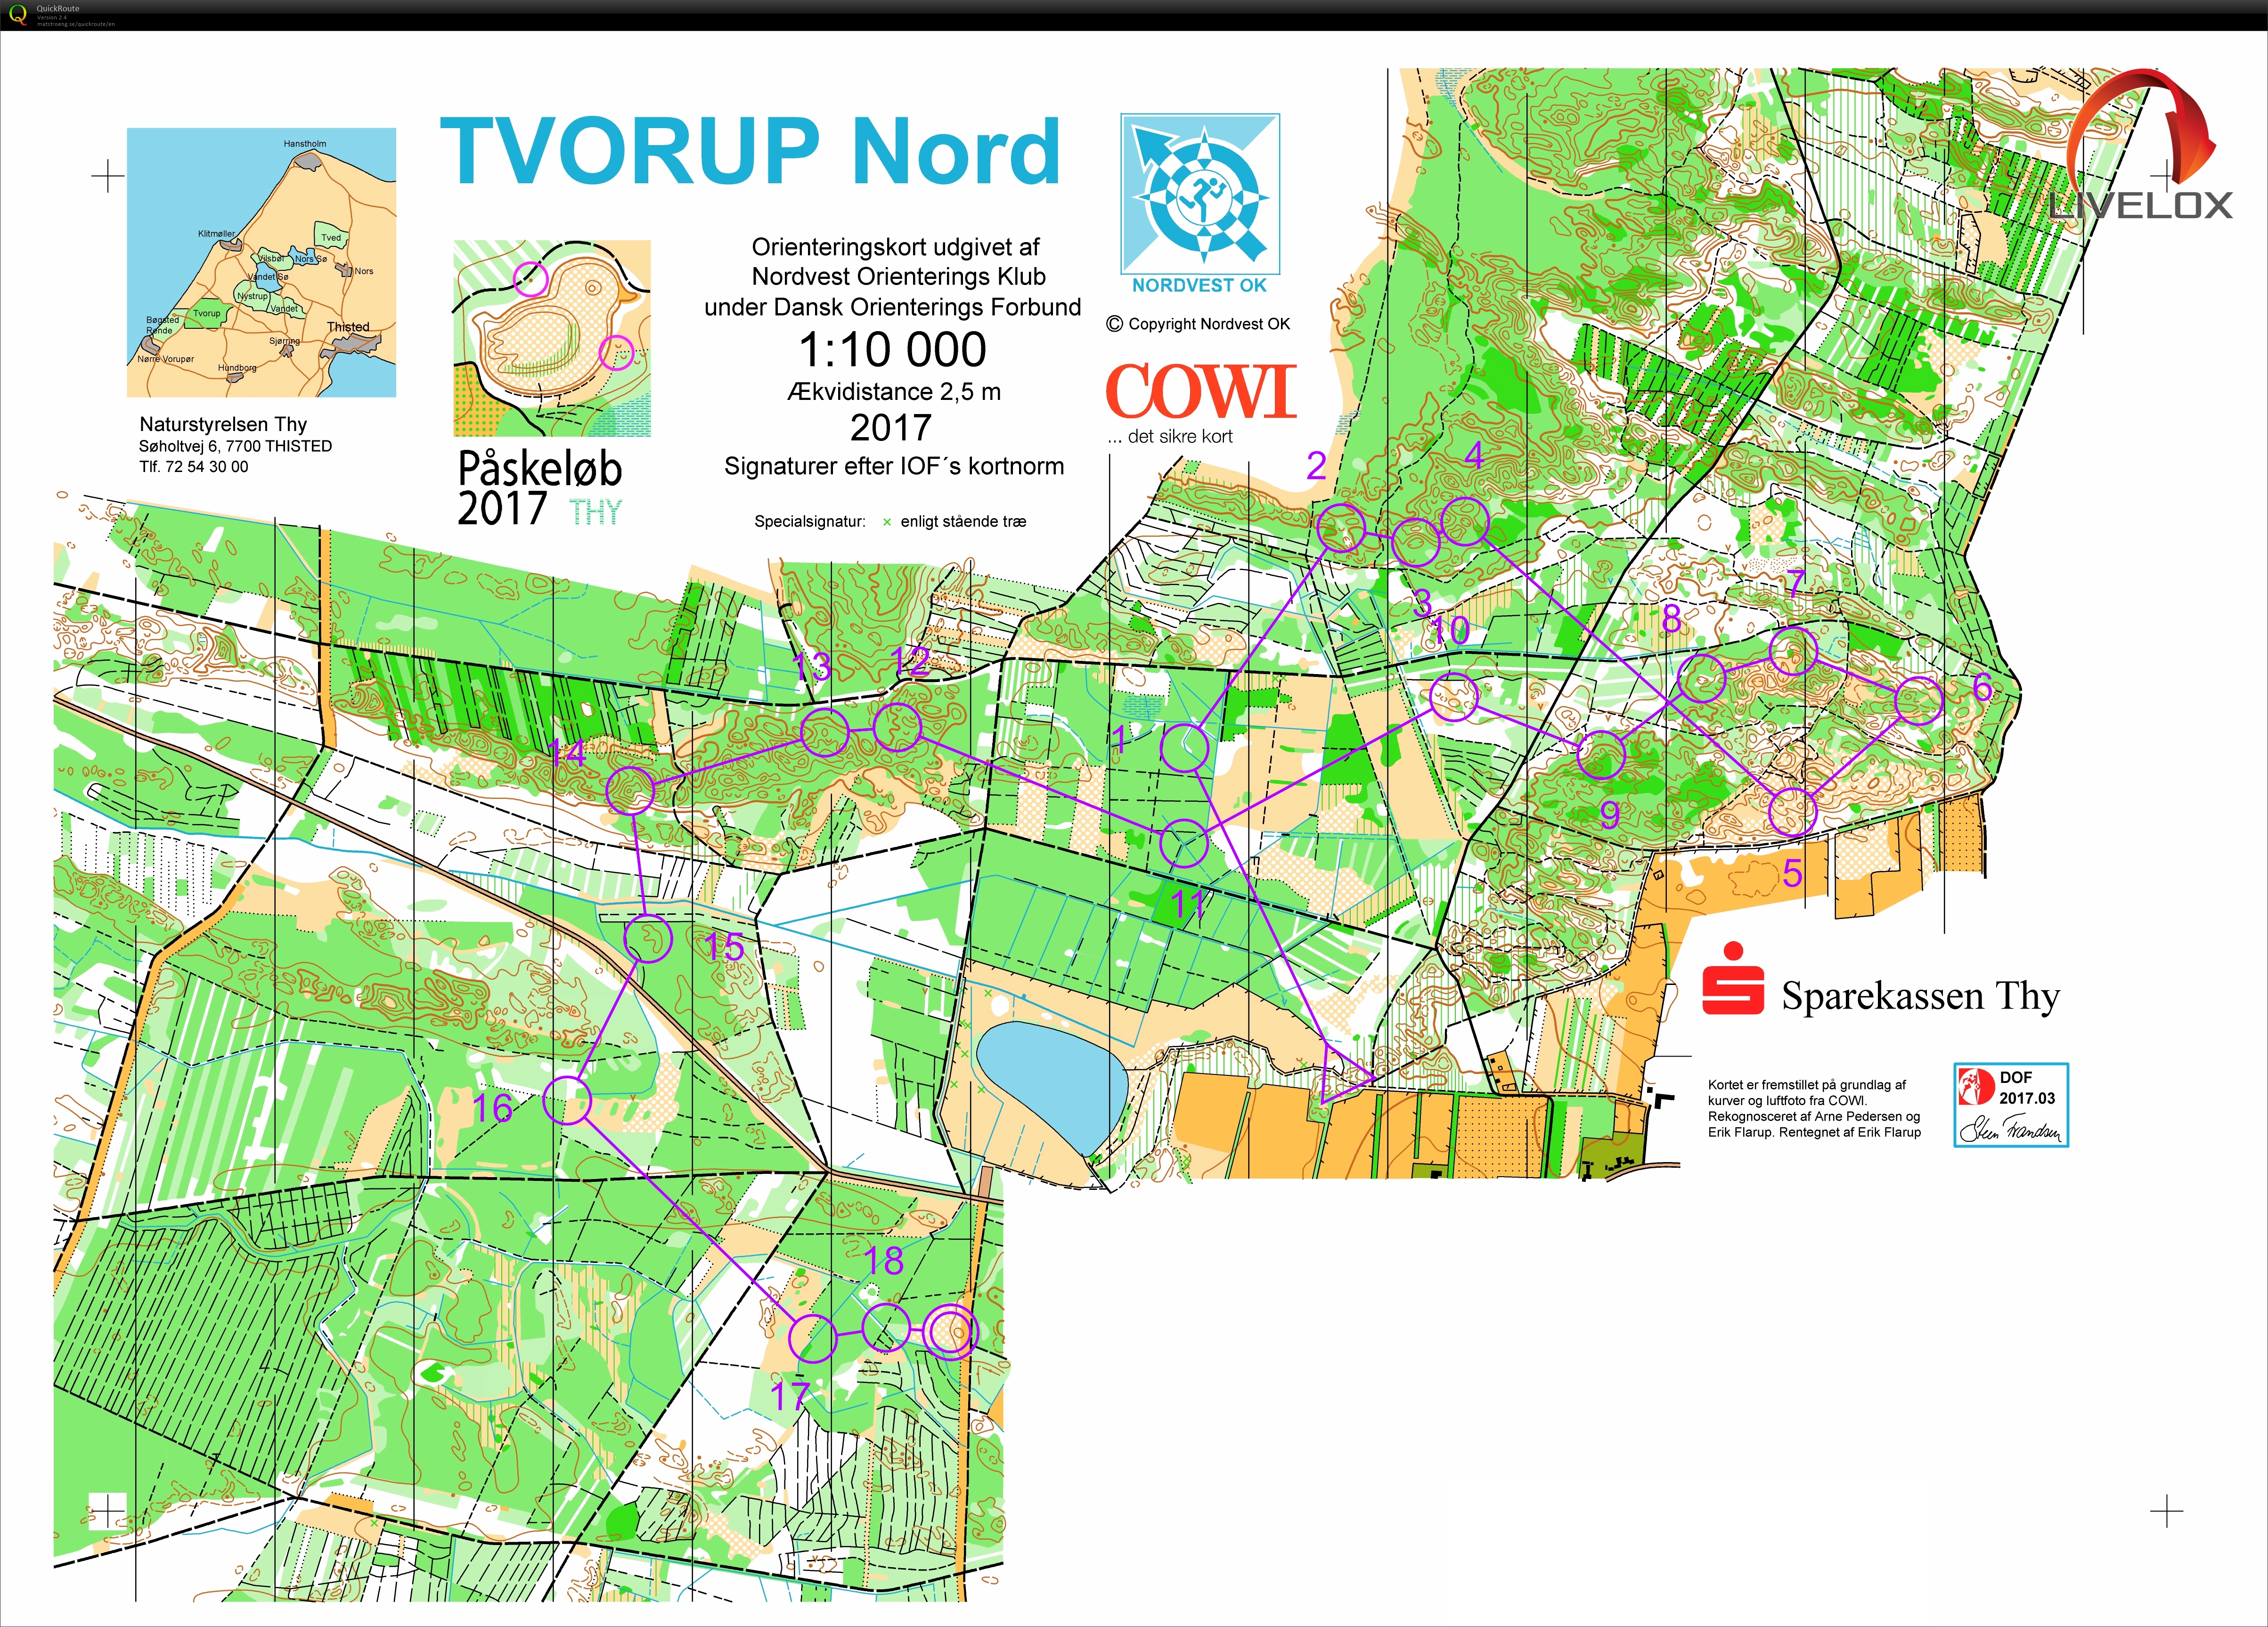 Tvorup Nord påskeløb 2017 etape 2 - H21AK (2017-04-14)